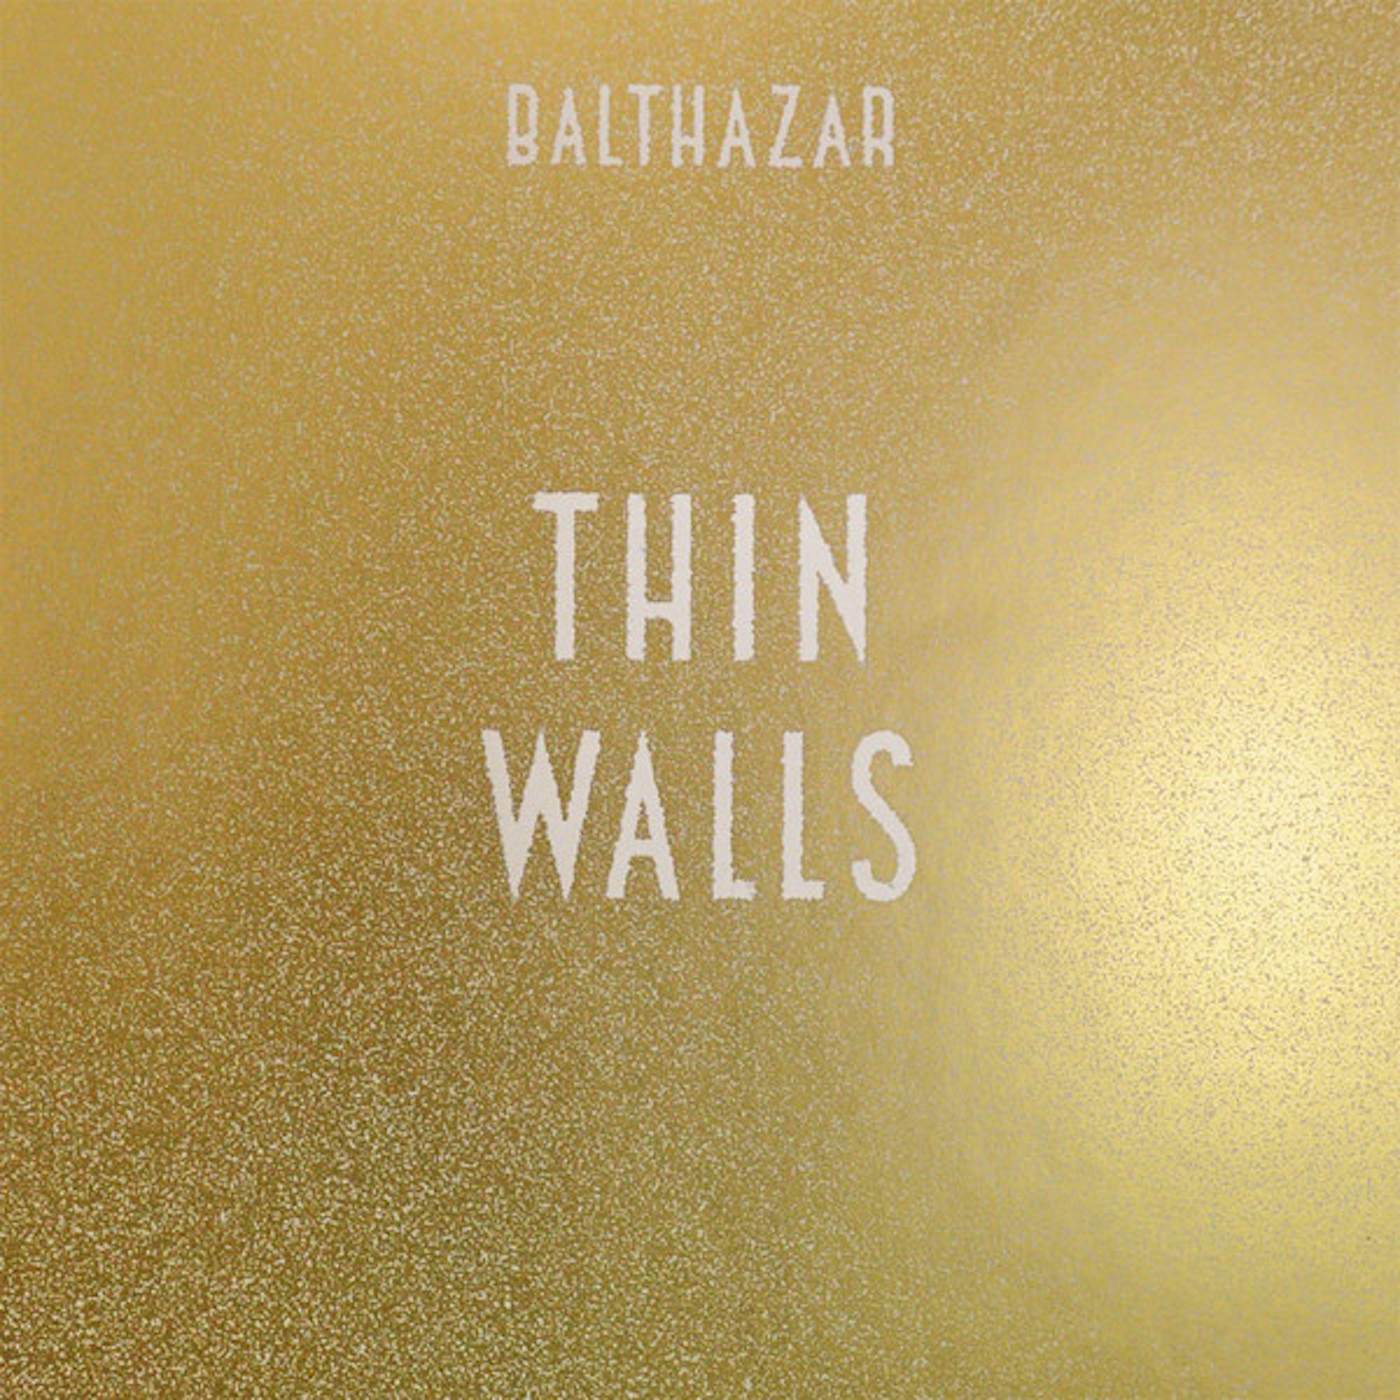 Balthazar Thin walls Vinyl Record